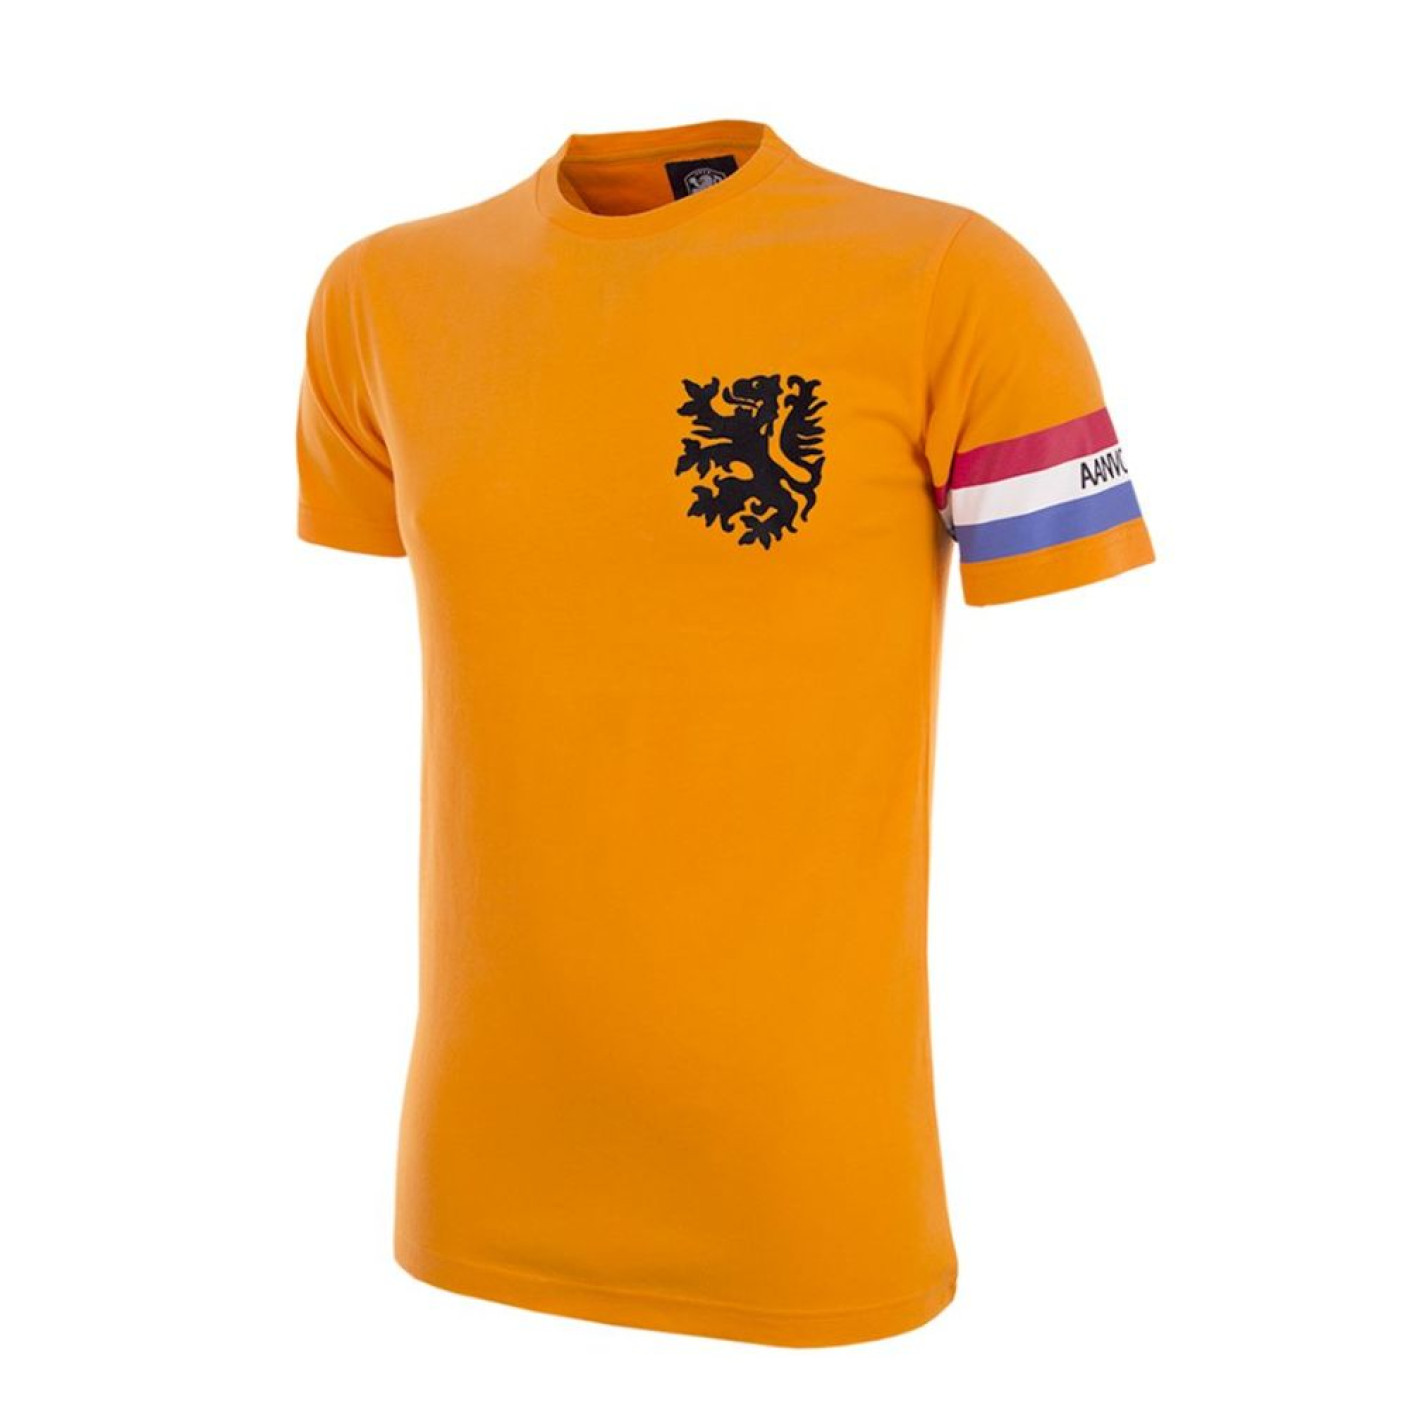 COPA Pays-Bas T-Shirt Capitaine